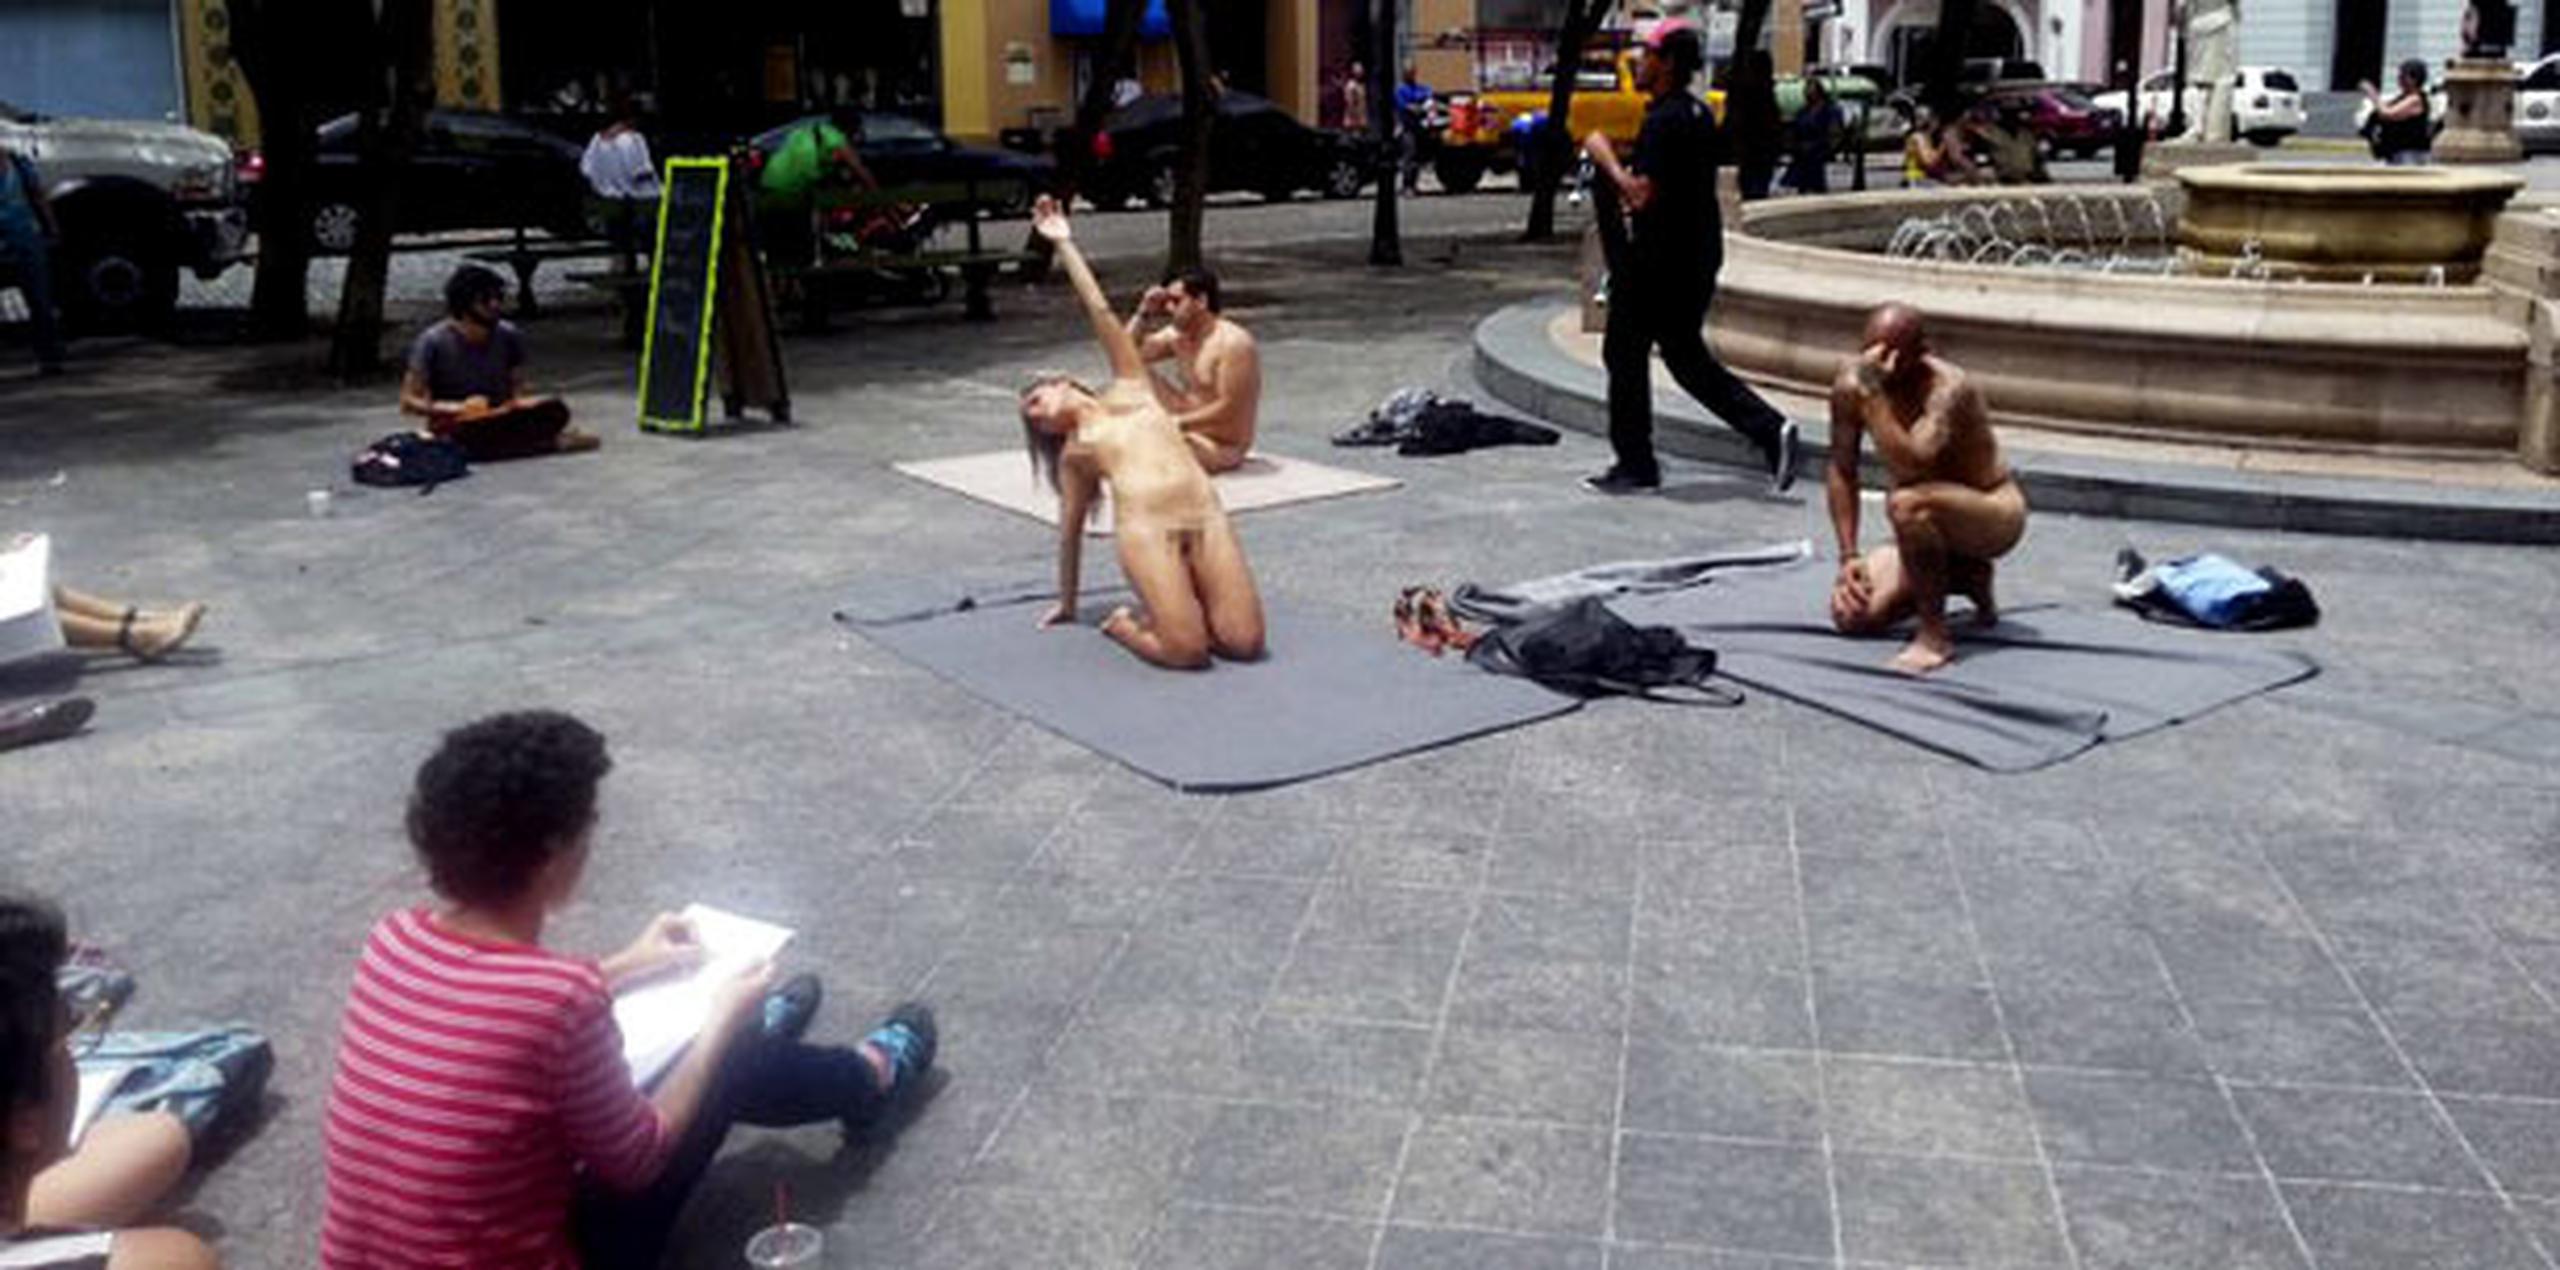 Tres personas se desnudaron esta tarde en la Plaza de Armas, del Viejo San Juan. (gerald.lopez@gfrmedia.com)